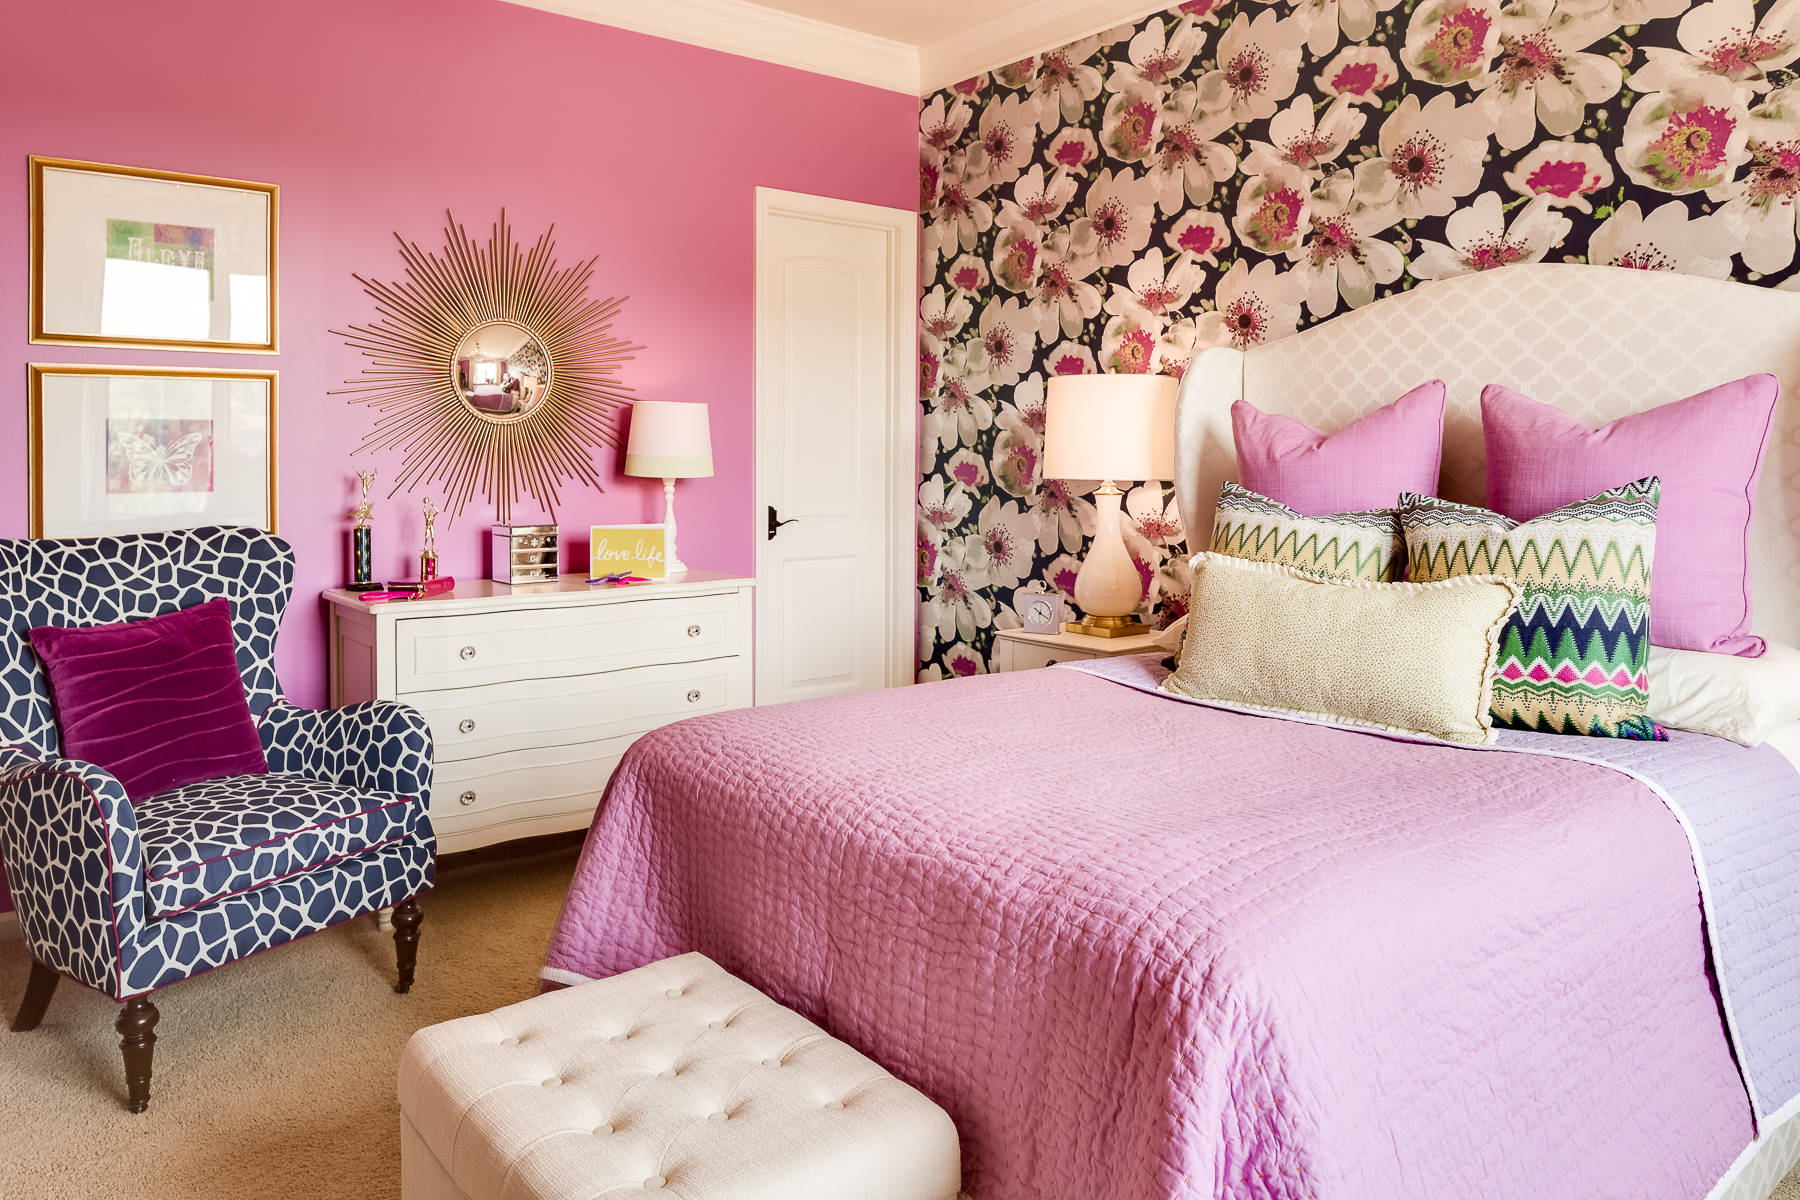 Girly Bedroom Decorating Ideas